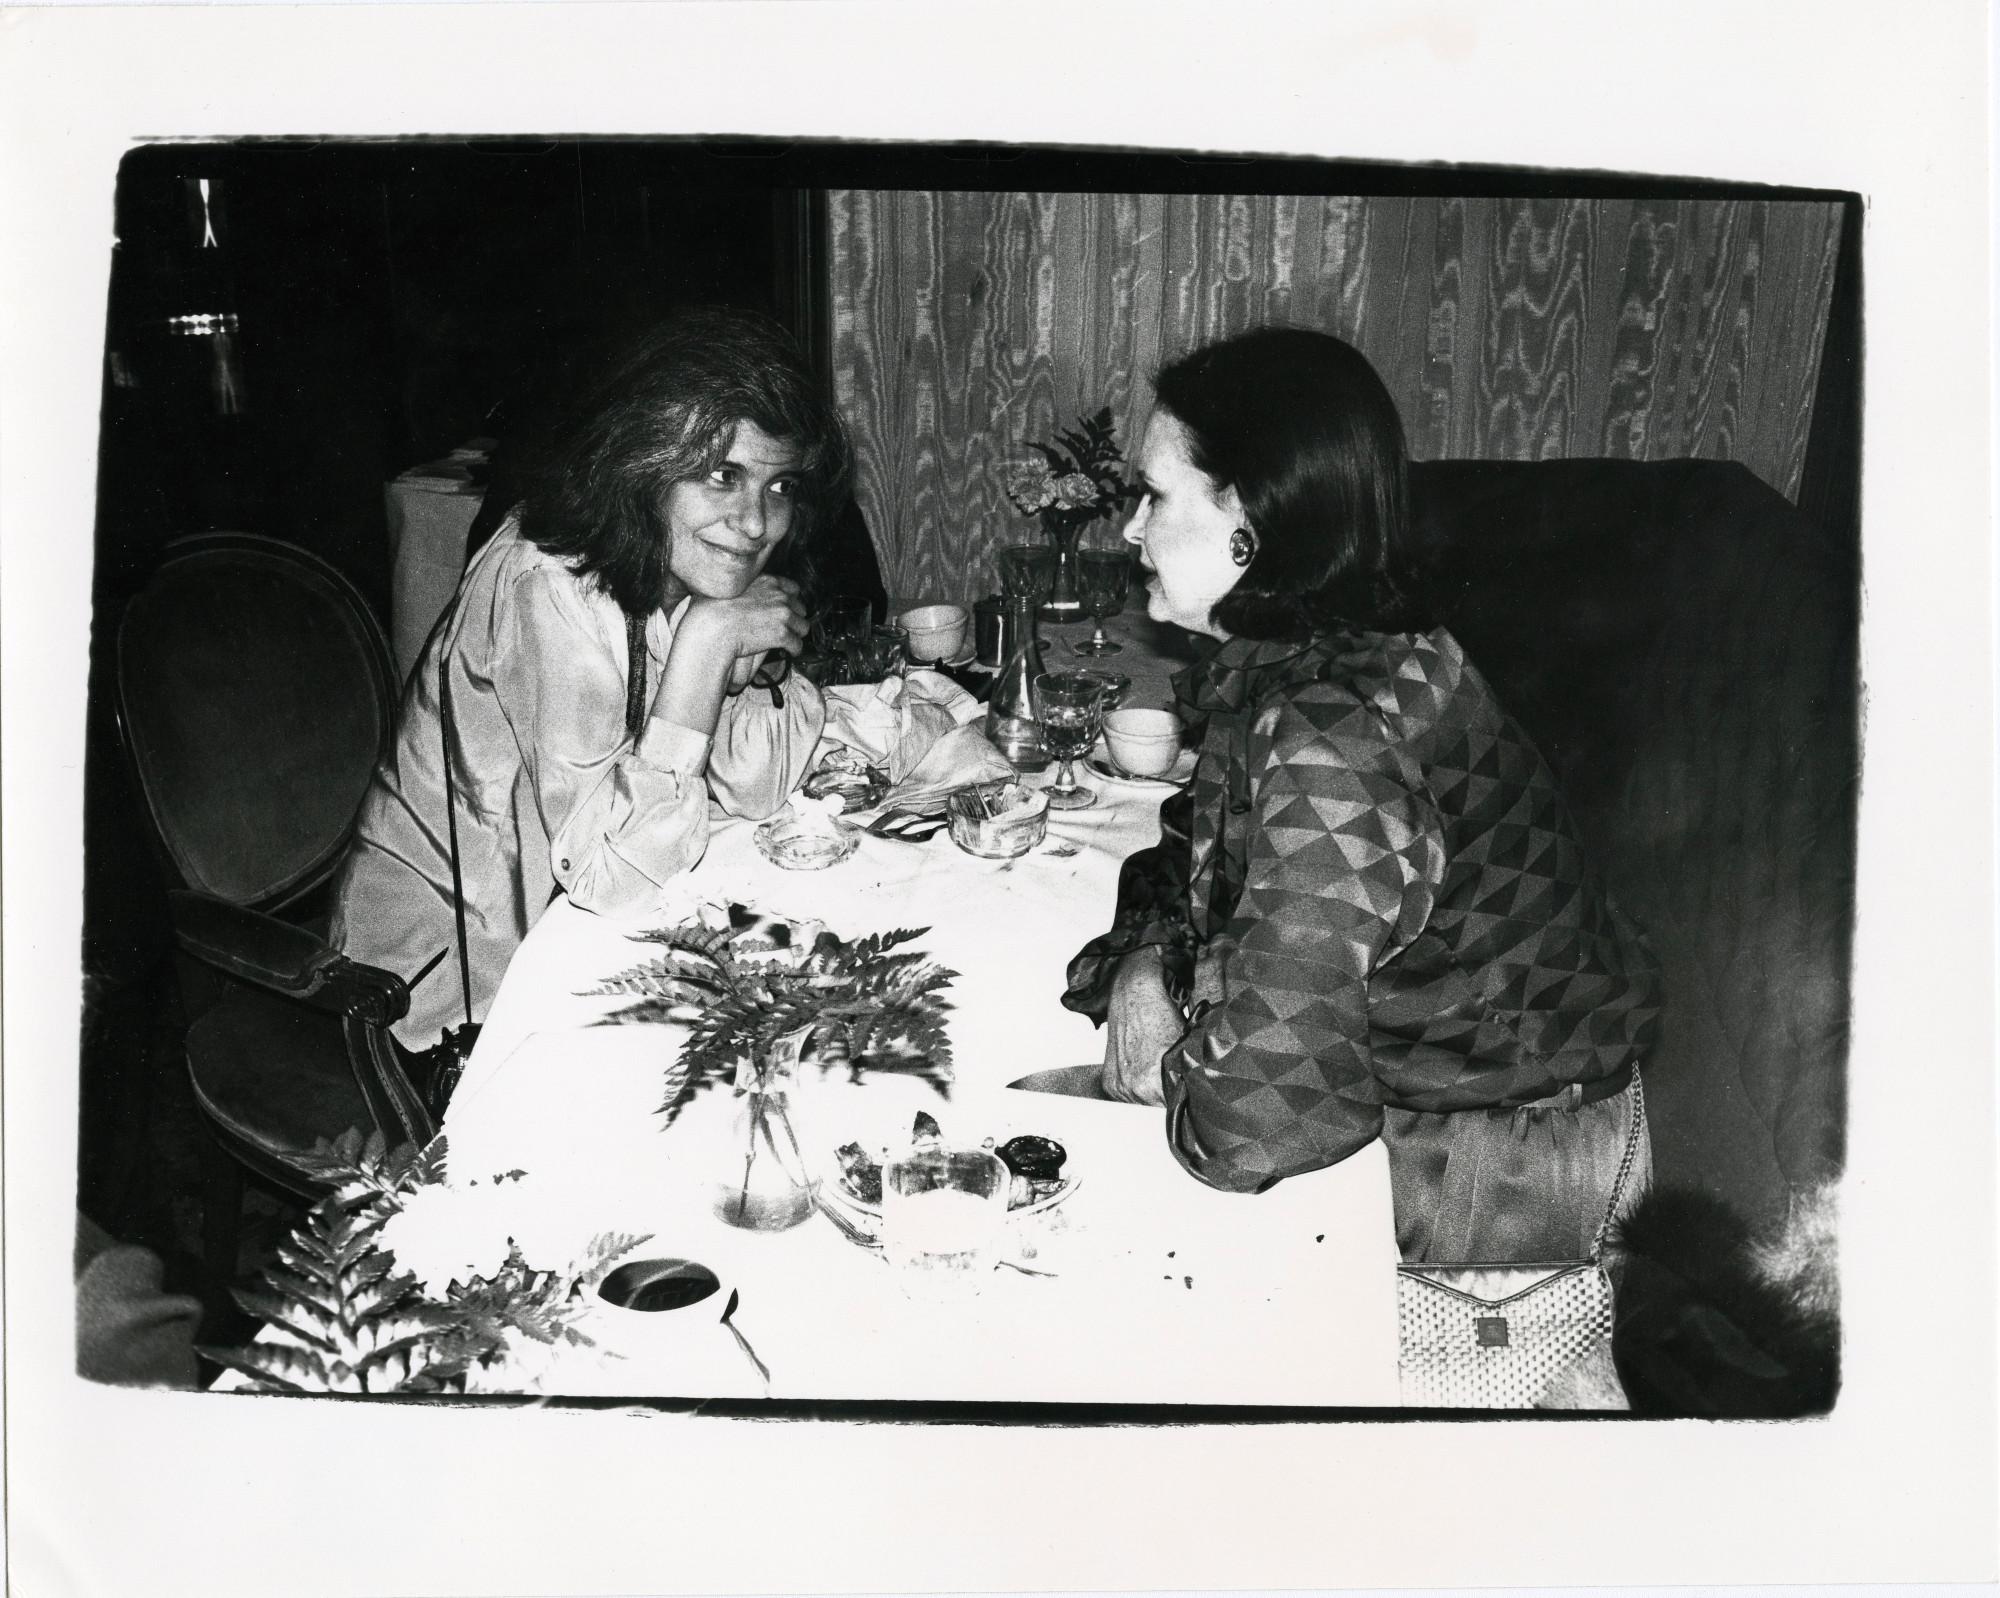 Andy Warhol Portrait Photograph - Susan Sontag and Gloria Vanderbilt